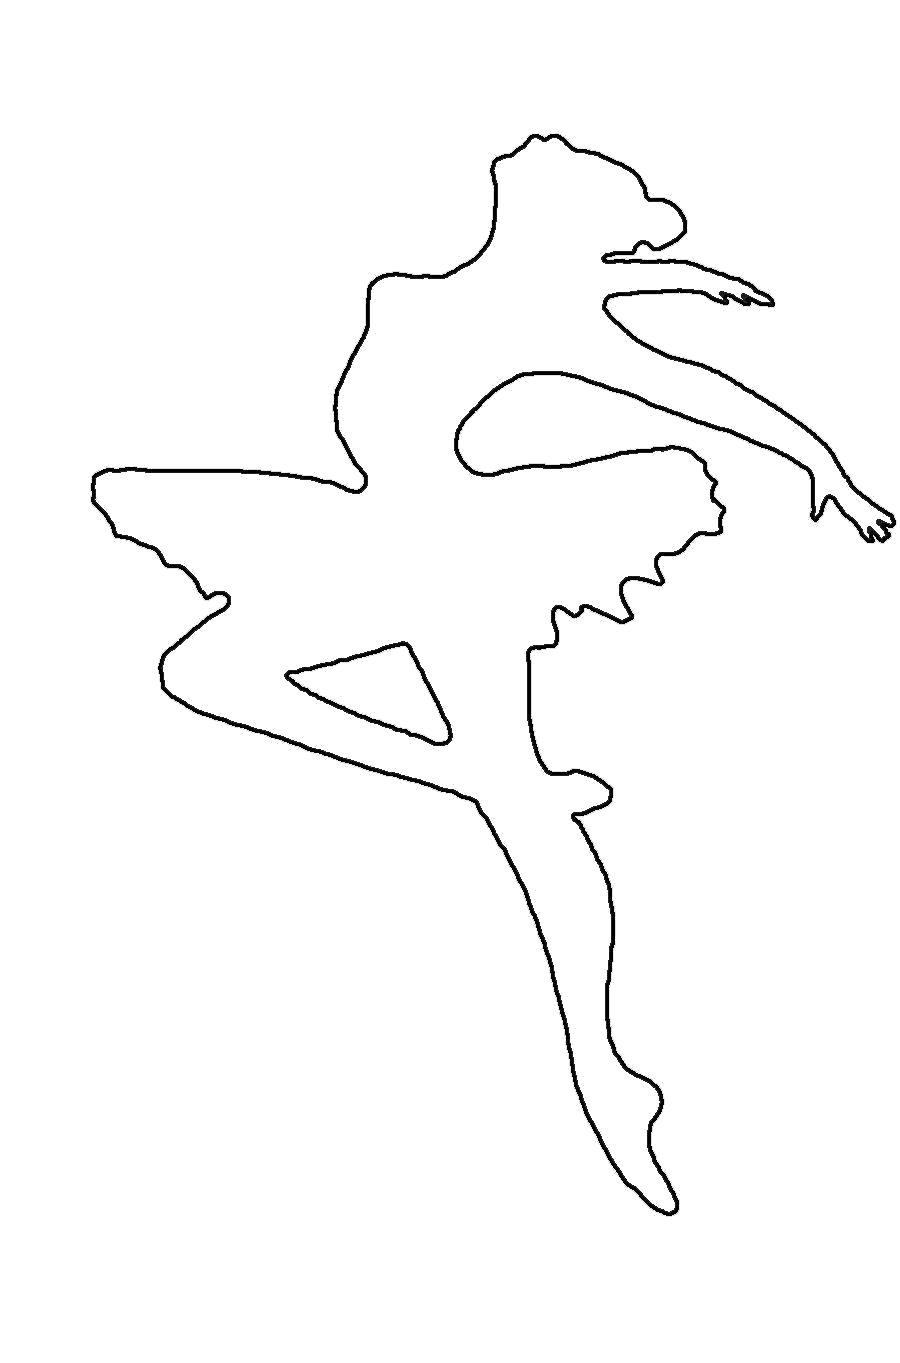 Название: Раскраска Раскраски шаблоны балерин балерина шаблон для вырезки из бумаги, для детского творчества. Категория: Шаблон. Теги: Шаблон.